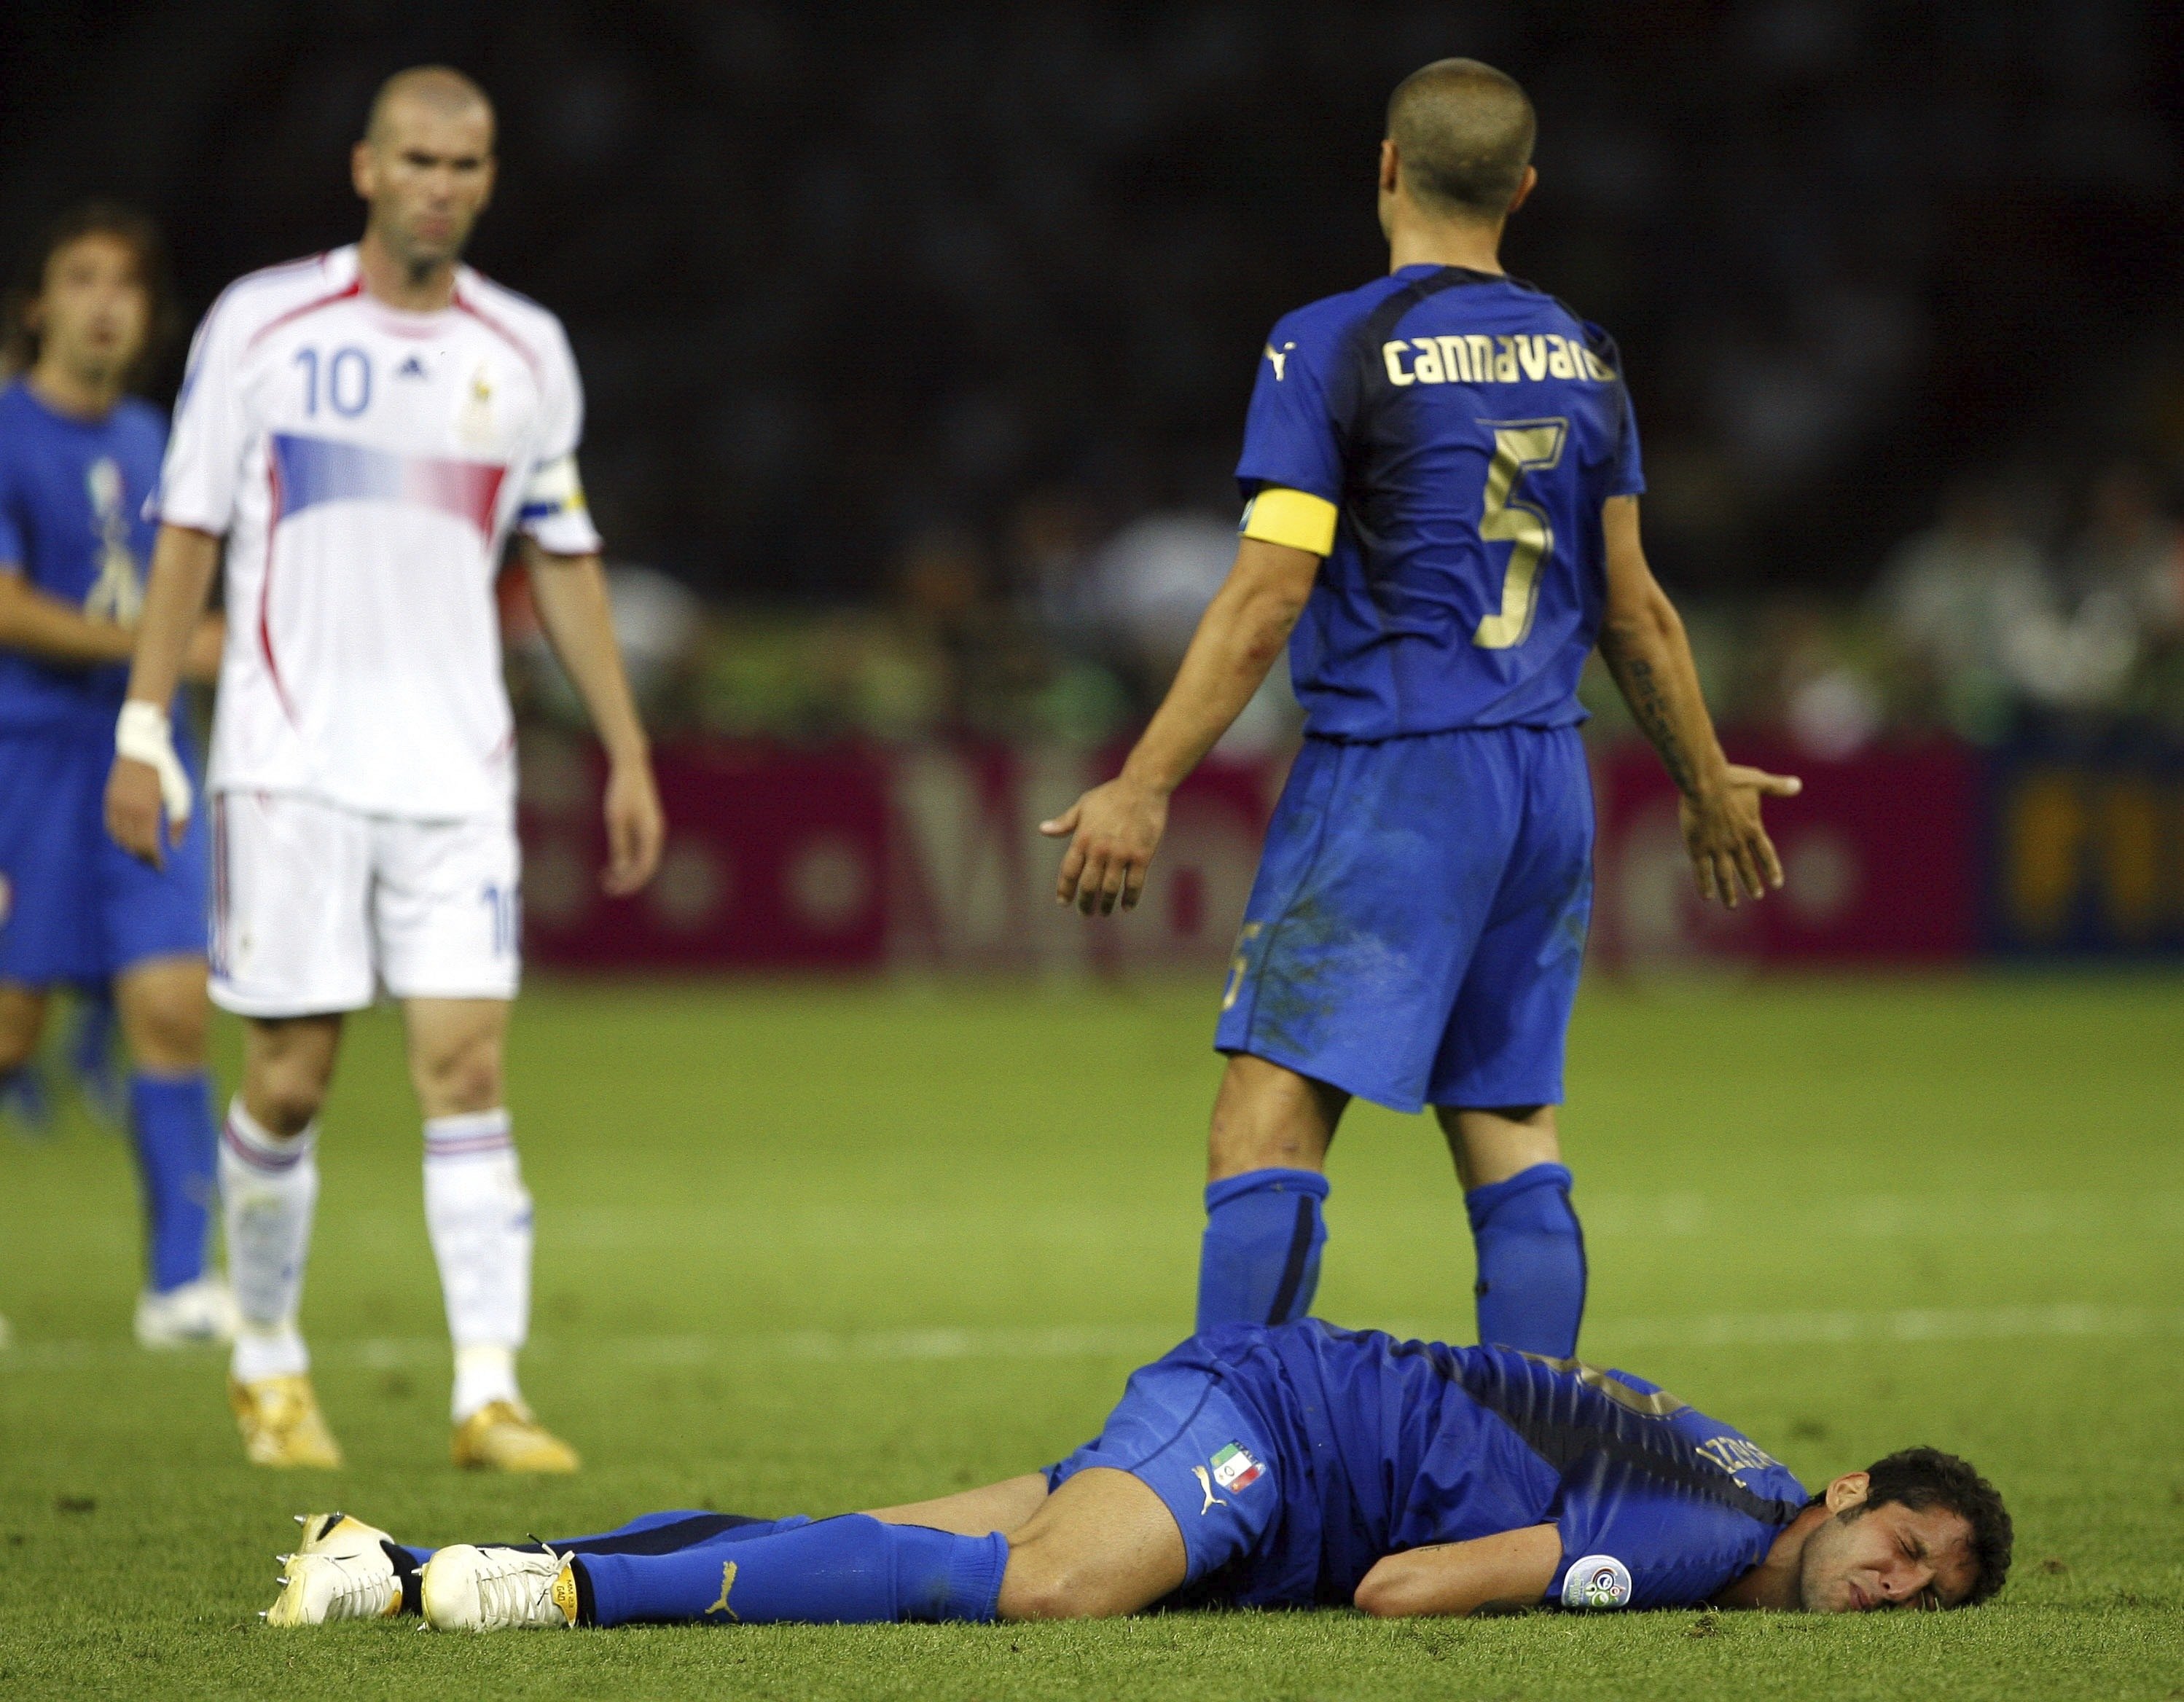 WORLD CUP: Zinedine Zidane ends his career with a headbutt